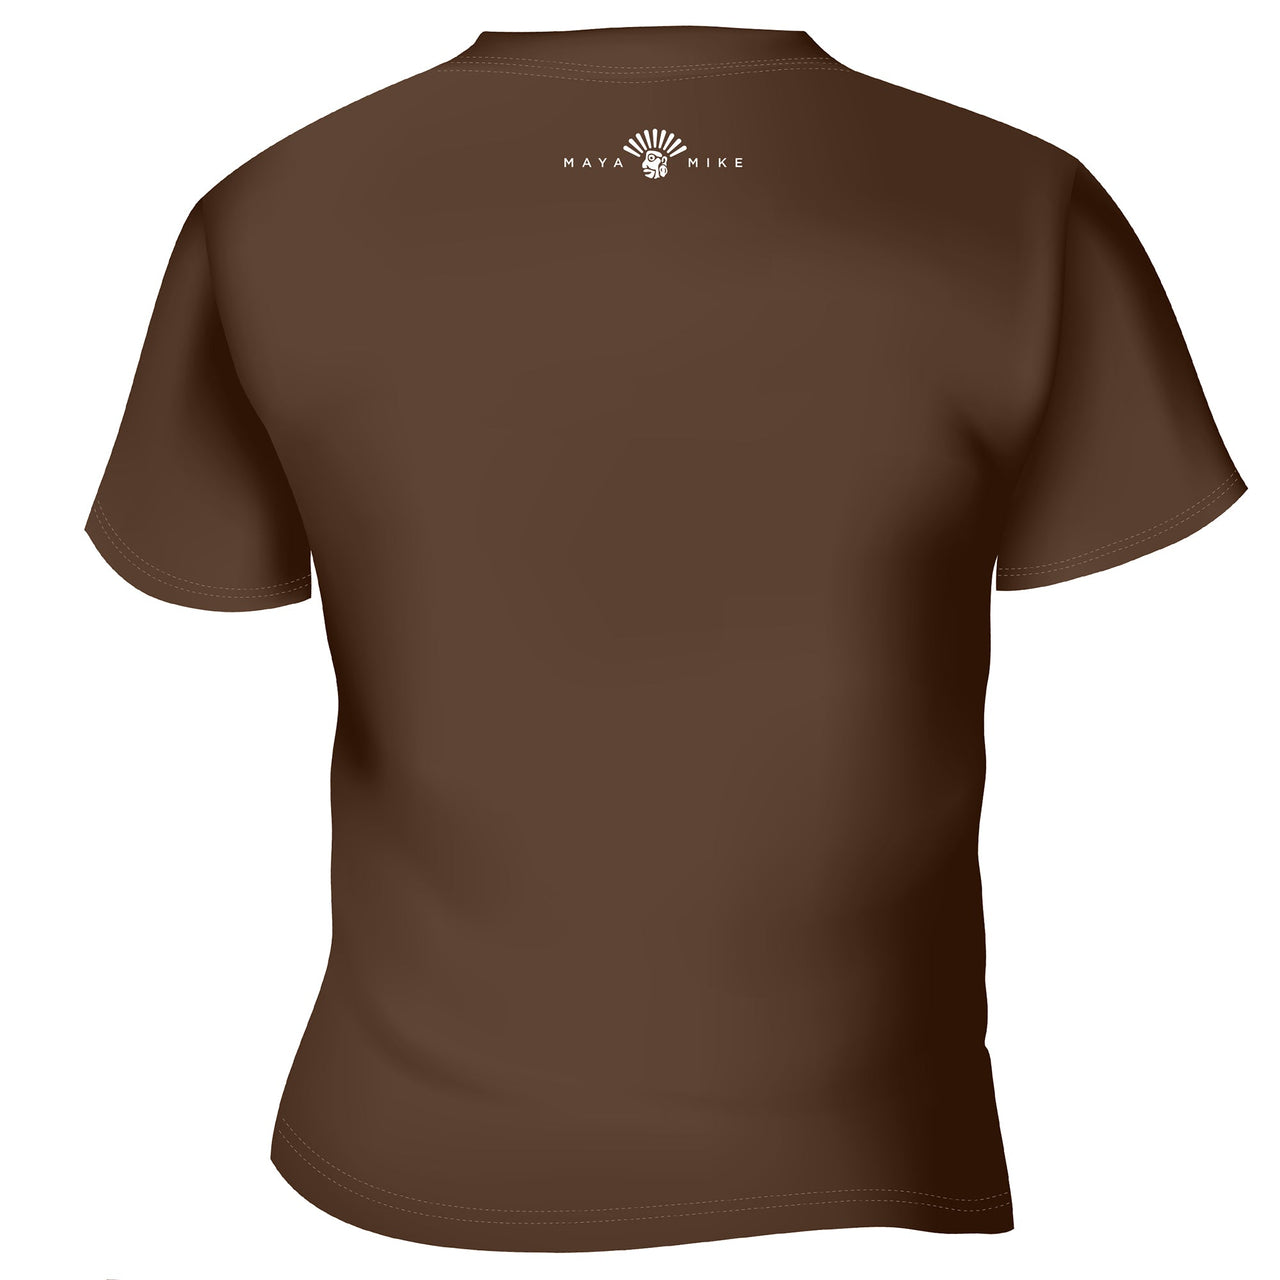 Maya Mike T-Shirt - First Edition Belizean Barbacoa - Unisex - Marie Sharp's Company Store